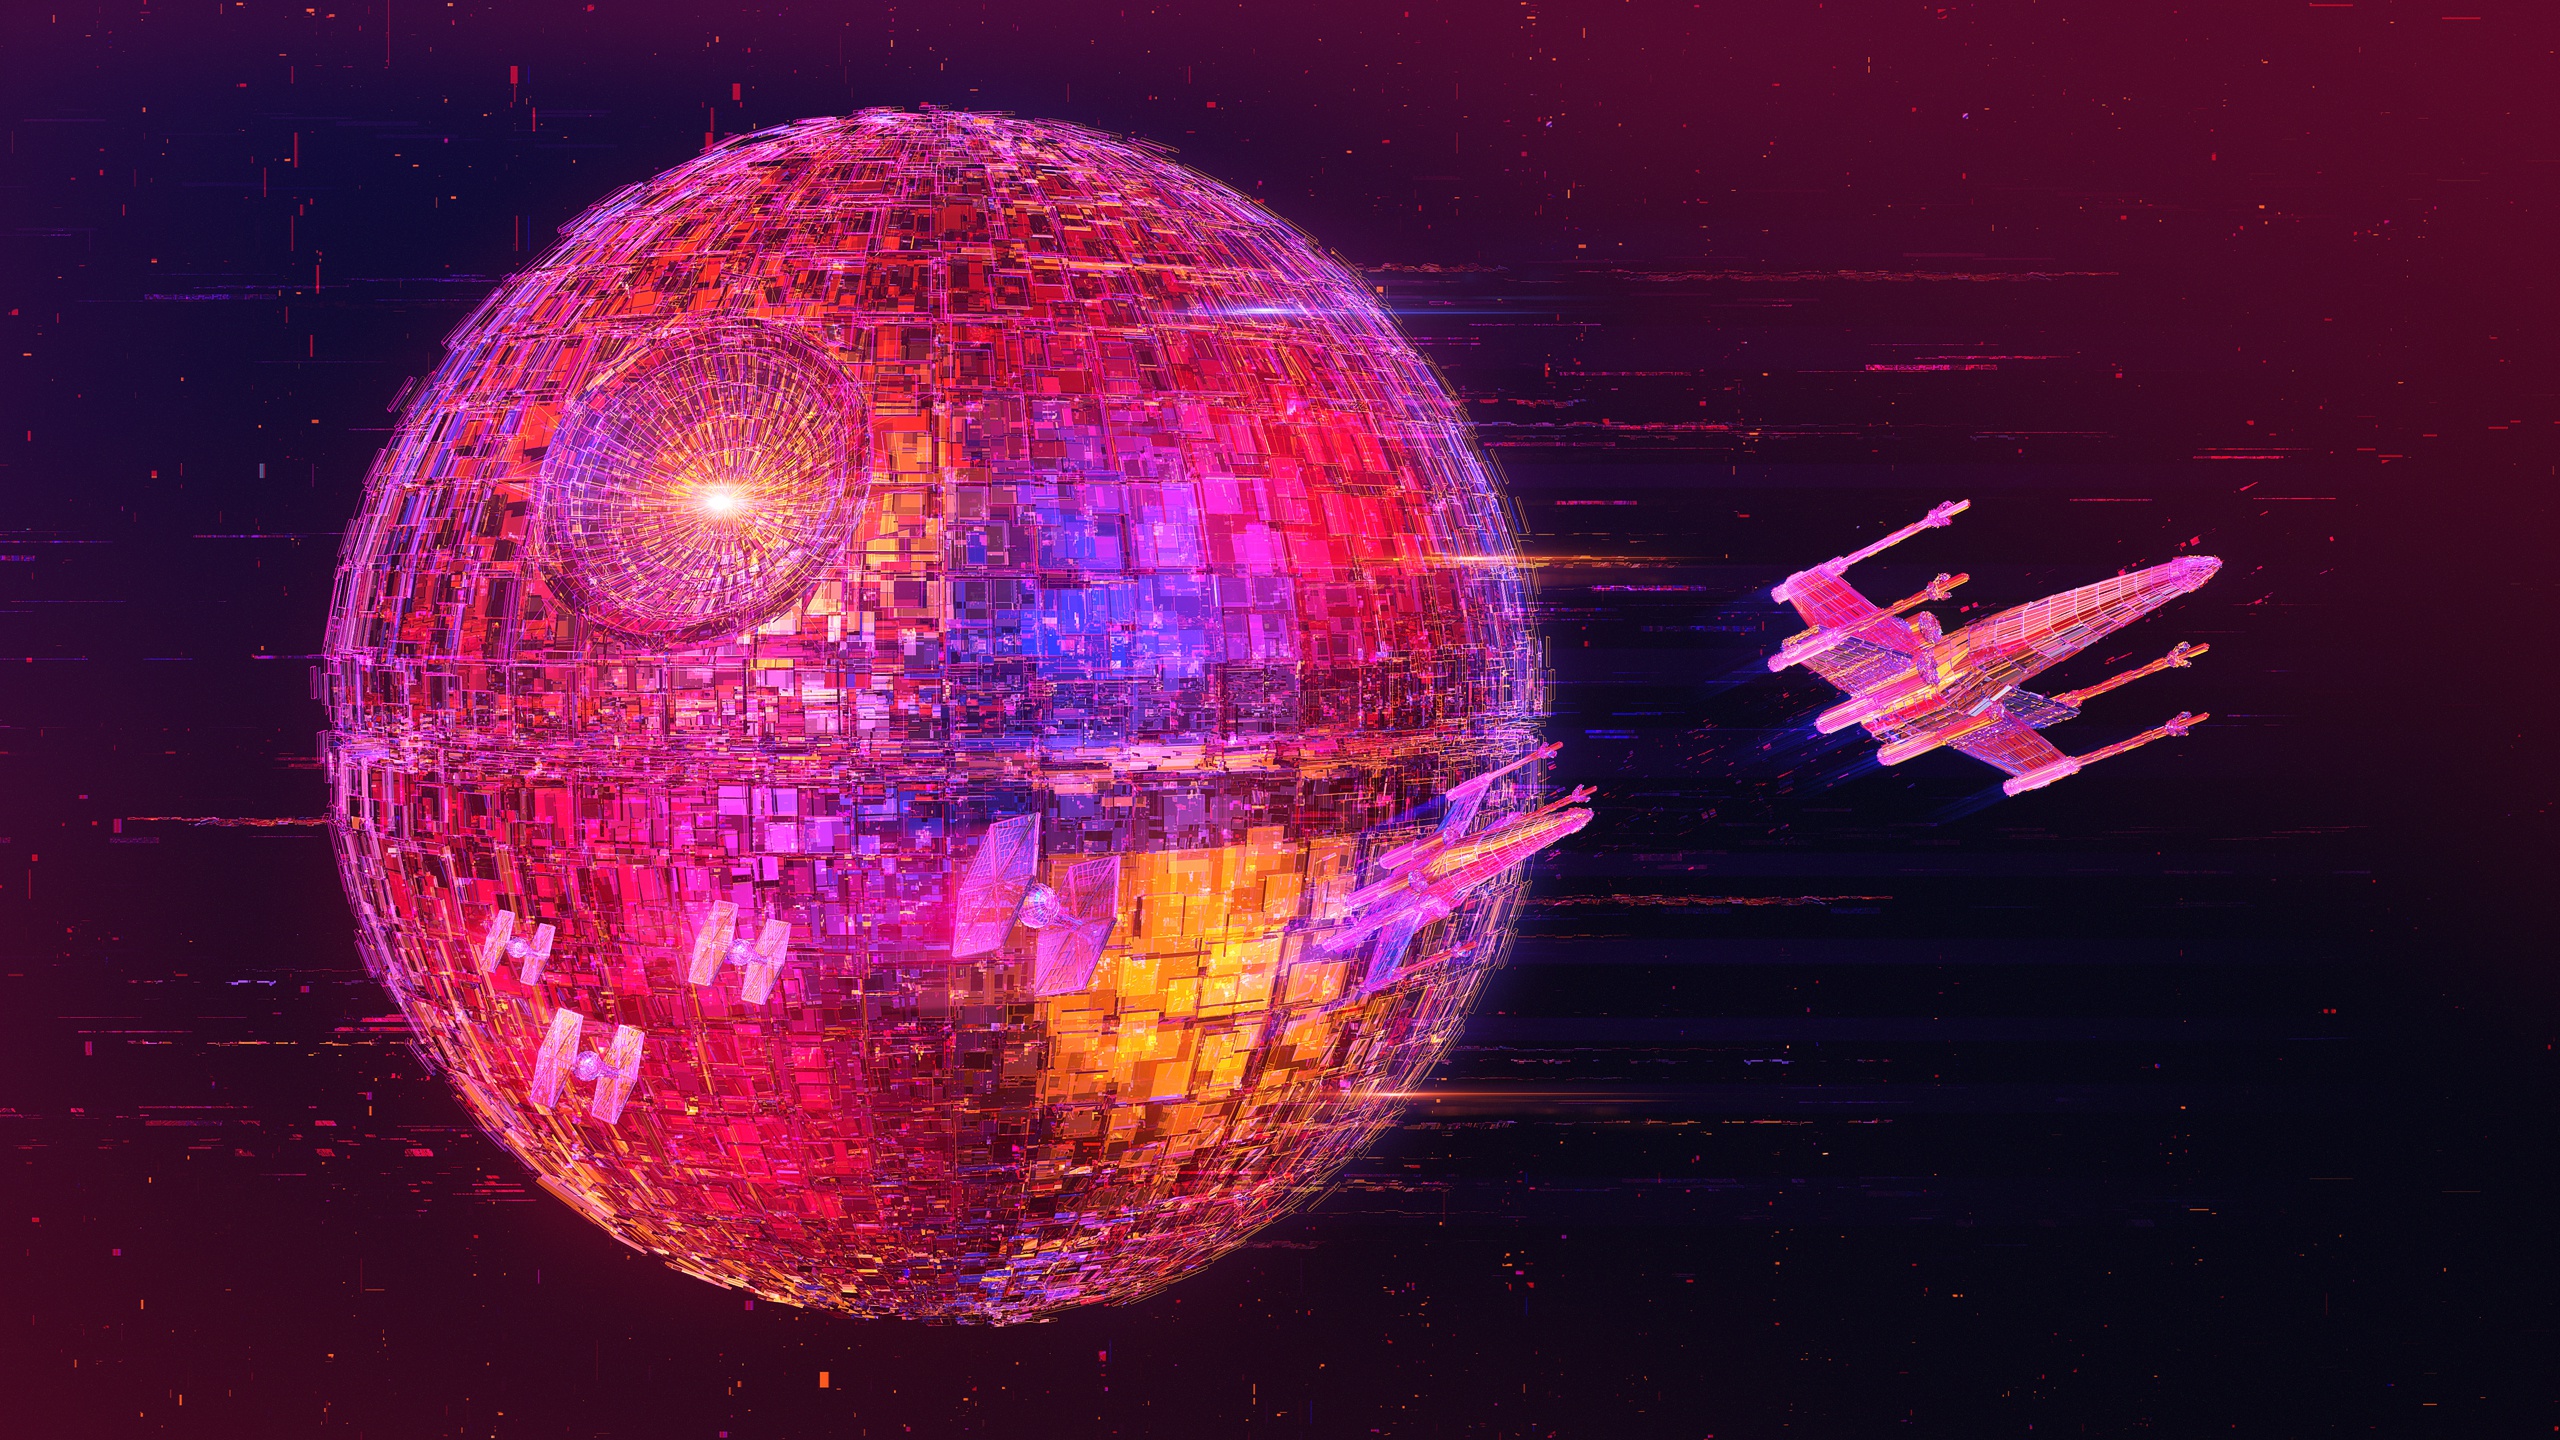 General 2560x1440 Star Wars digital art X-wing TIE Fighter Death Star neon artwork science fiction pink red glowing